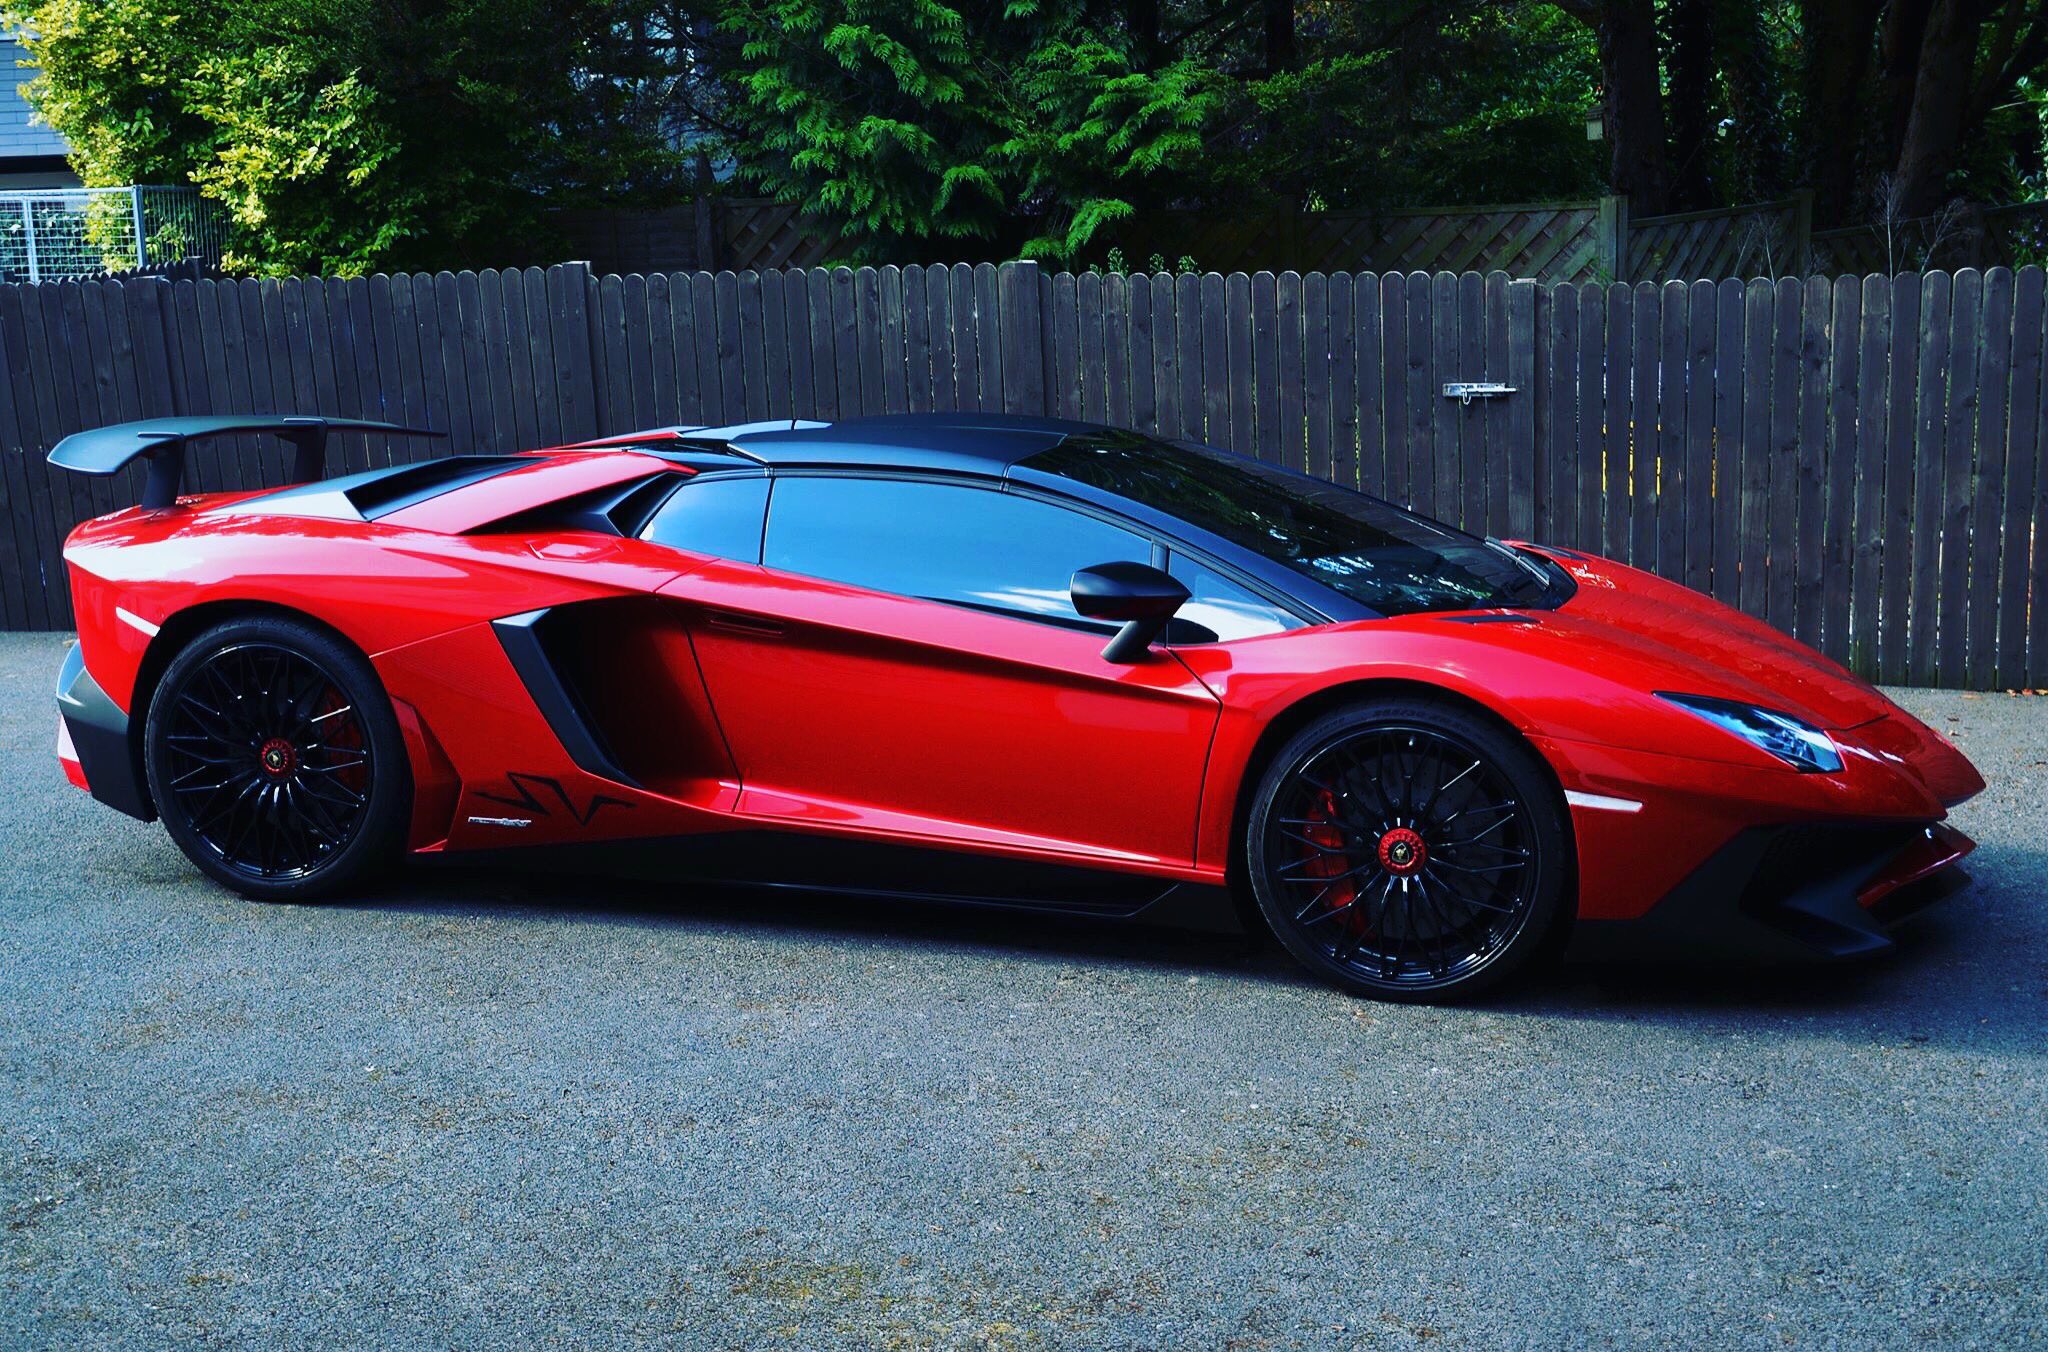 Cannonball Ireland on Twitter: "This gorgeous Lamborghini ...